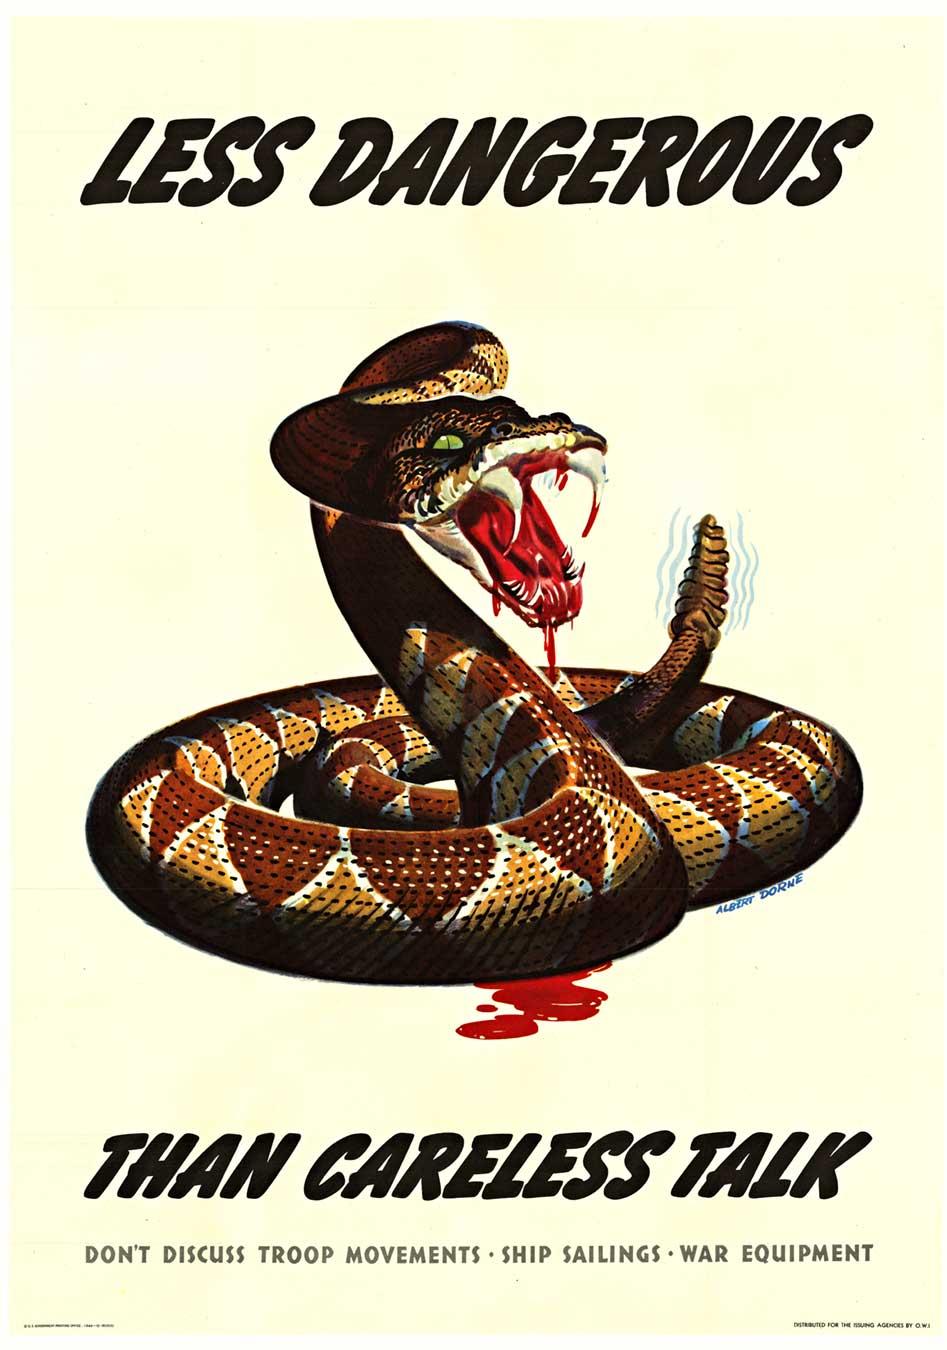 Original "Less Dangerous than Careless Talk" vintage World War Two poster